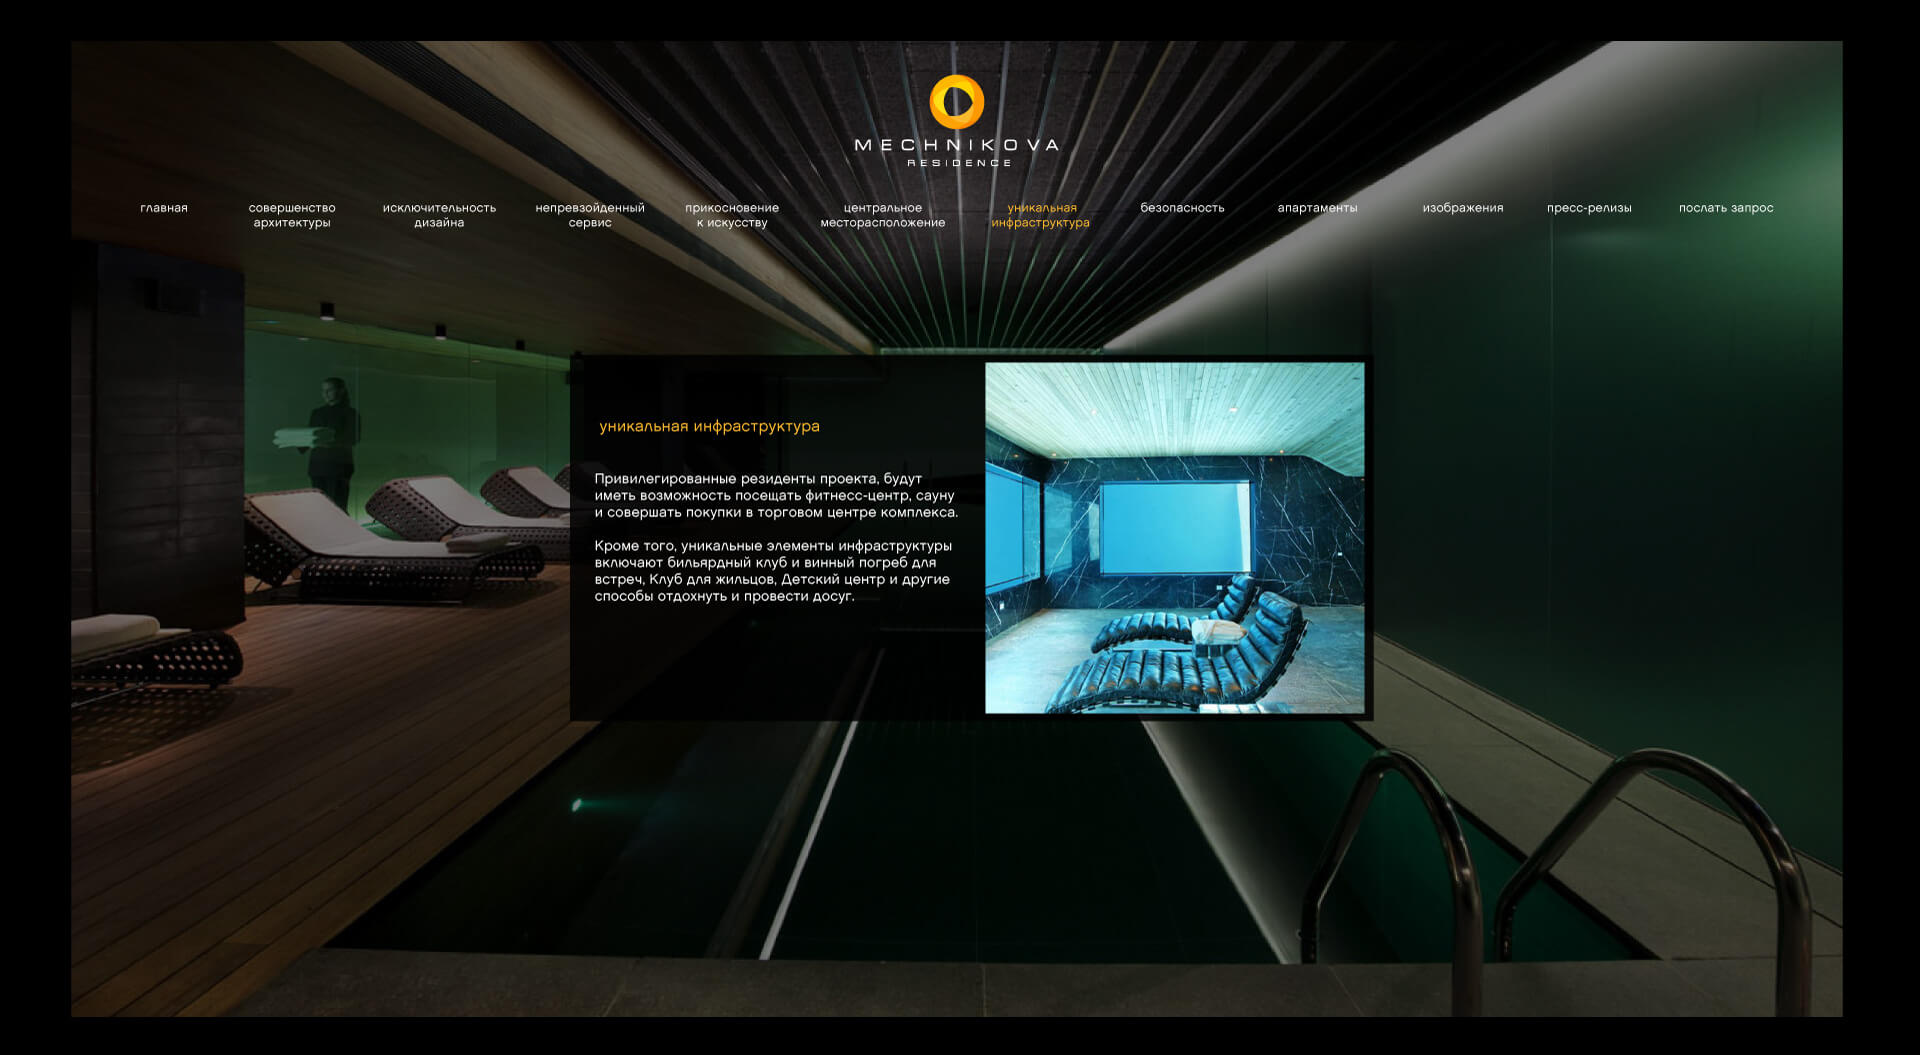 Residential luxury property branding, Mechnikova swimming pool, website design for Continuum Ukraine